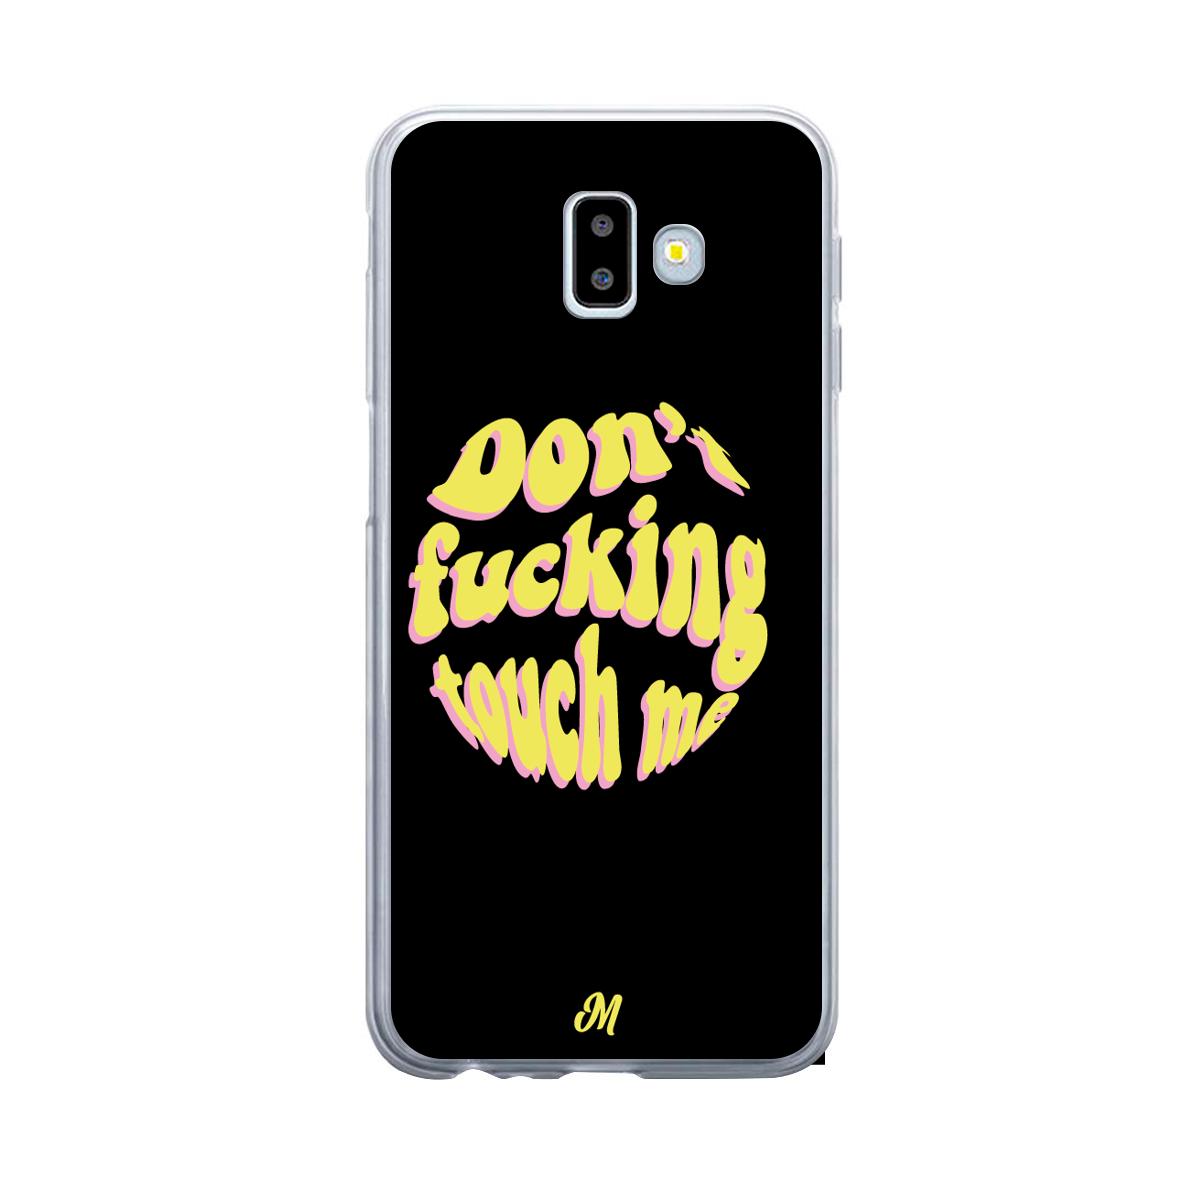 Case para Samsung J6 Plus Don't fucking touch me amarillo - Mandala Cases